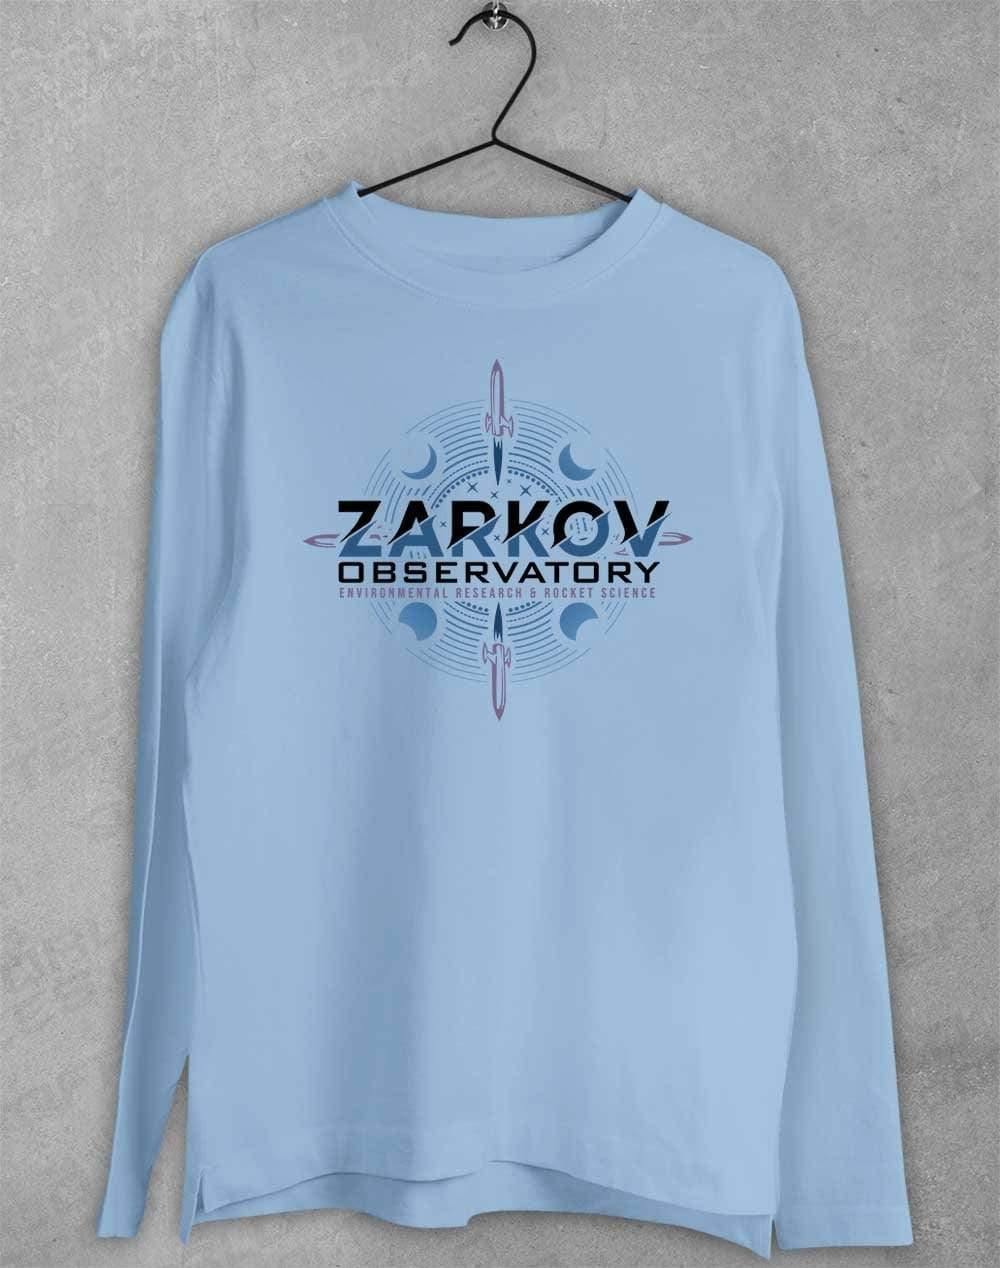 Zarkov Observatory Long Sleeve T-Shirt S / Light Blue  - Off World Tees